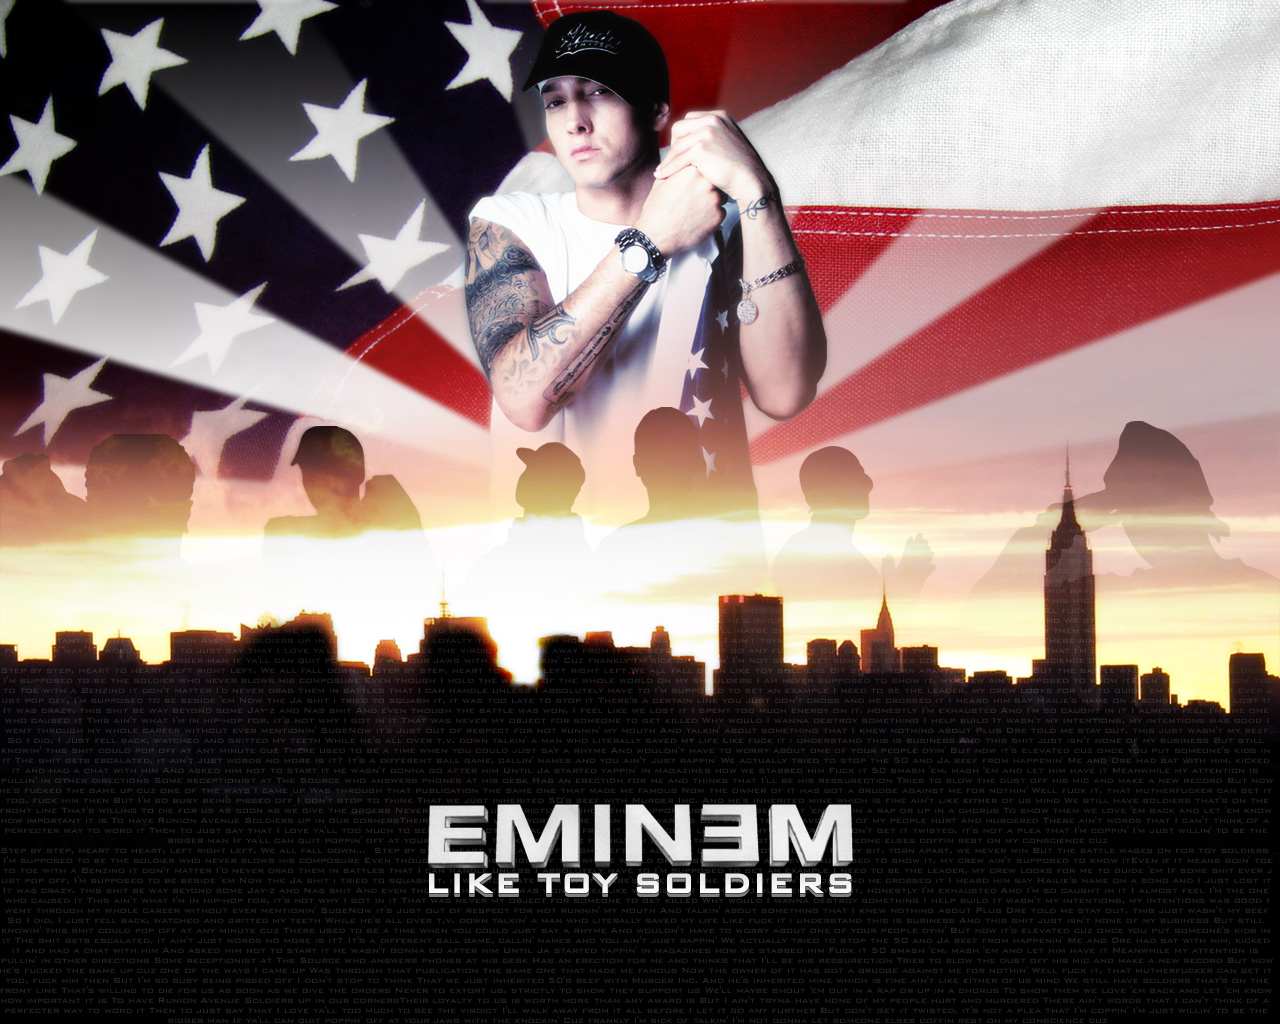 http://4.bp.blogspot.com/_7ub7OOBg4Xc/TVG6mJ_0RNI/AAAAAAAAAqA/uFAjZwXuadw/s1600/Eminem_wallpaper6.jpg